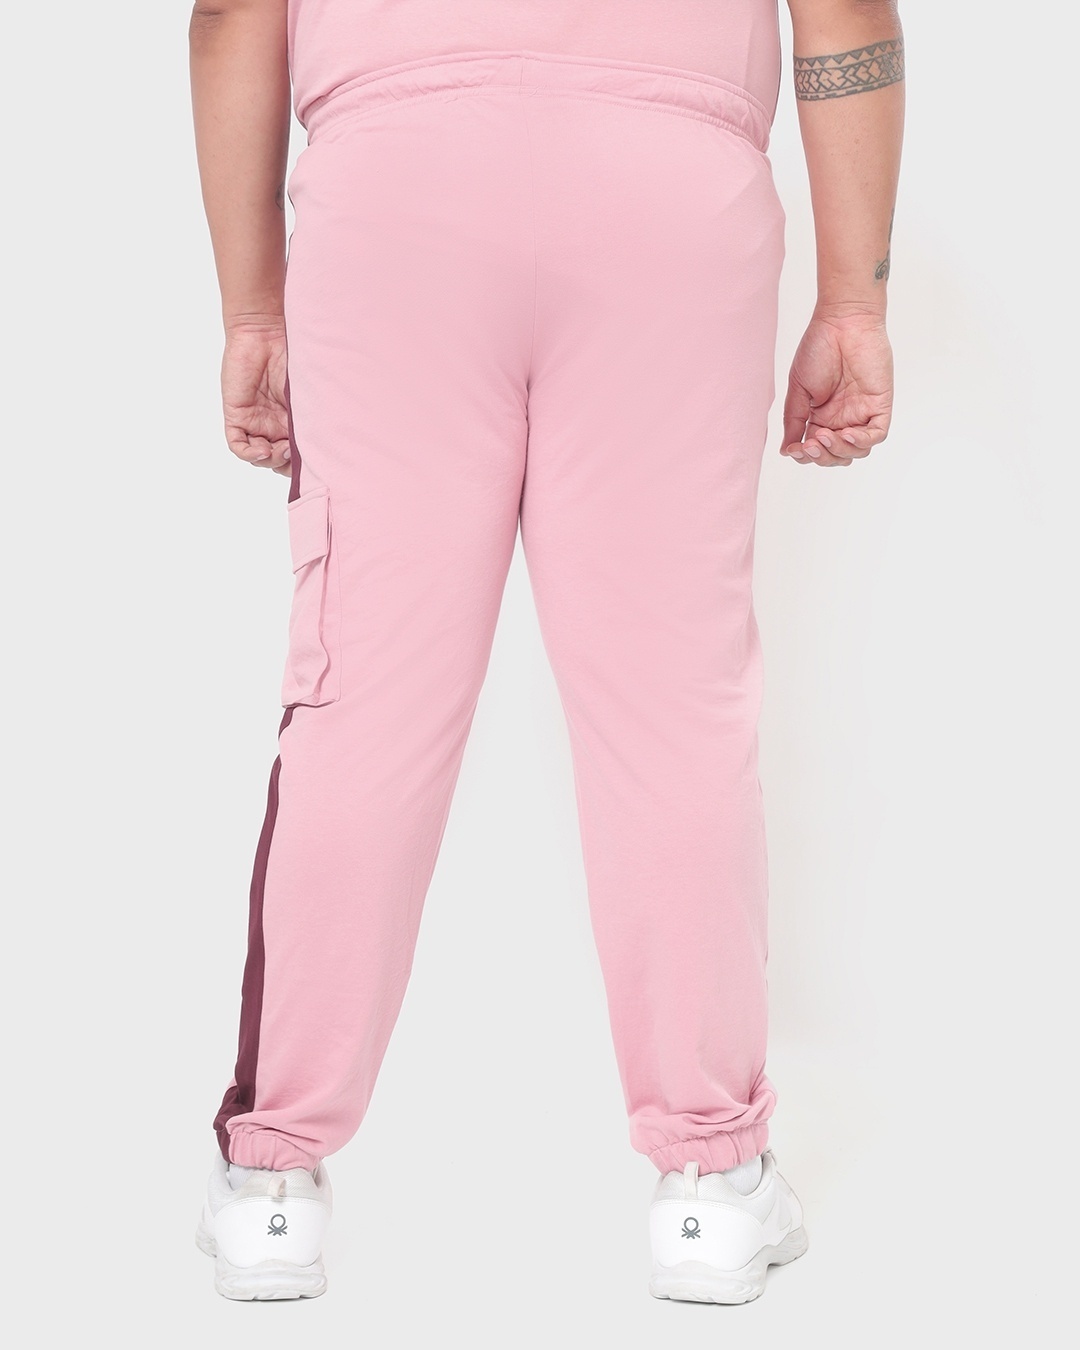 Shop Men's Cheeky Pink Pocket Side Panel Plus Size Joggers-Design